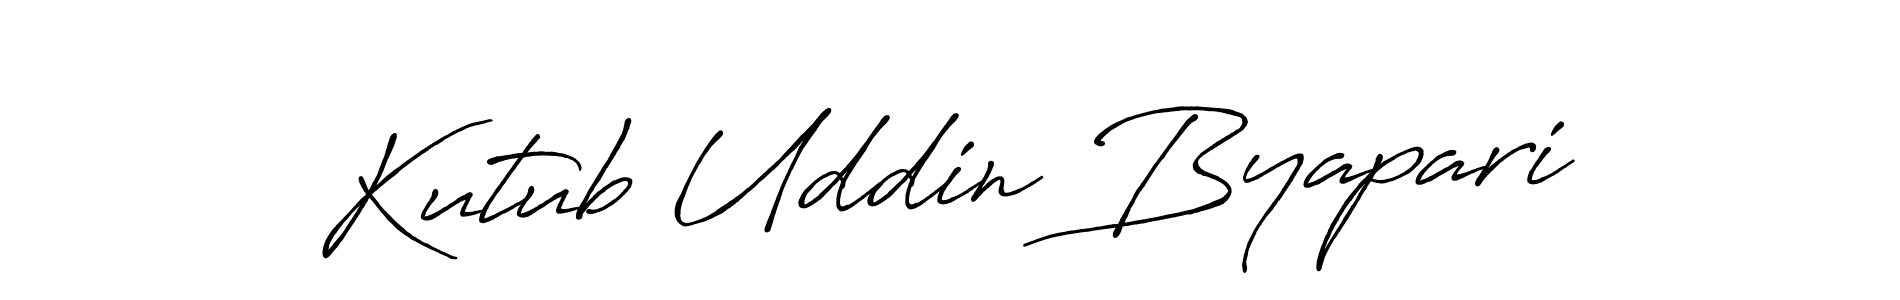 How to Draw Kutub Uddin Byapari signature style? Antro_Vectra_Bolder is a latest design signature styles for name Kutub Uddin Byapari. Kutub Uddin Byapari signature style 7 images and pictures png